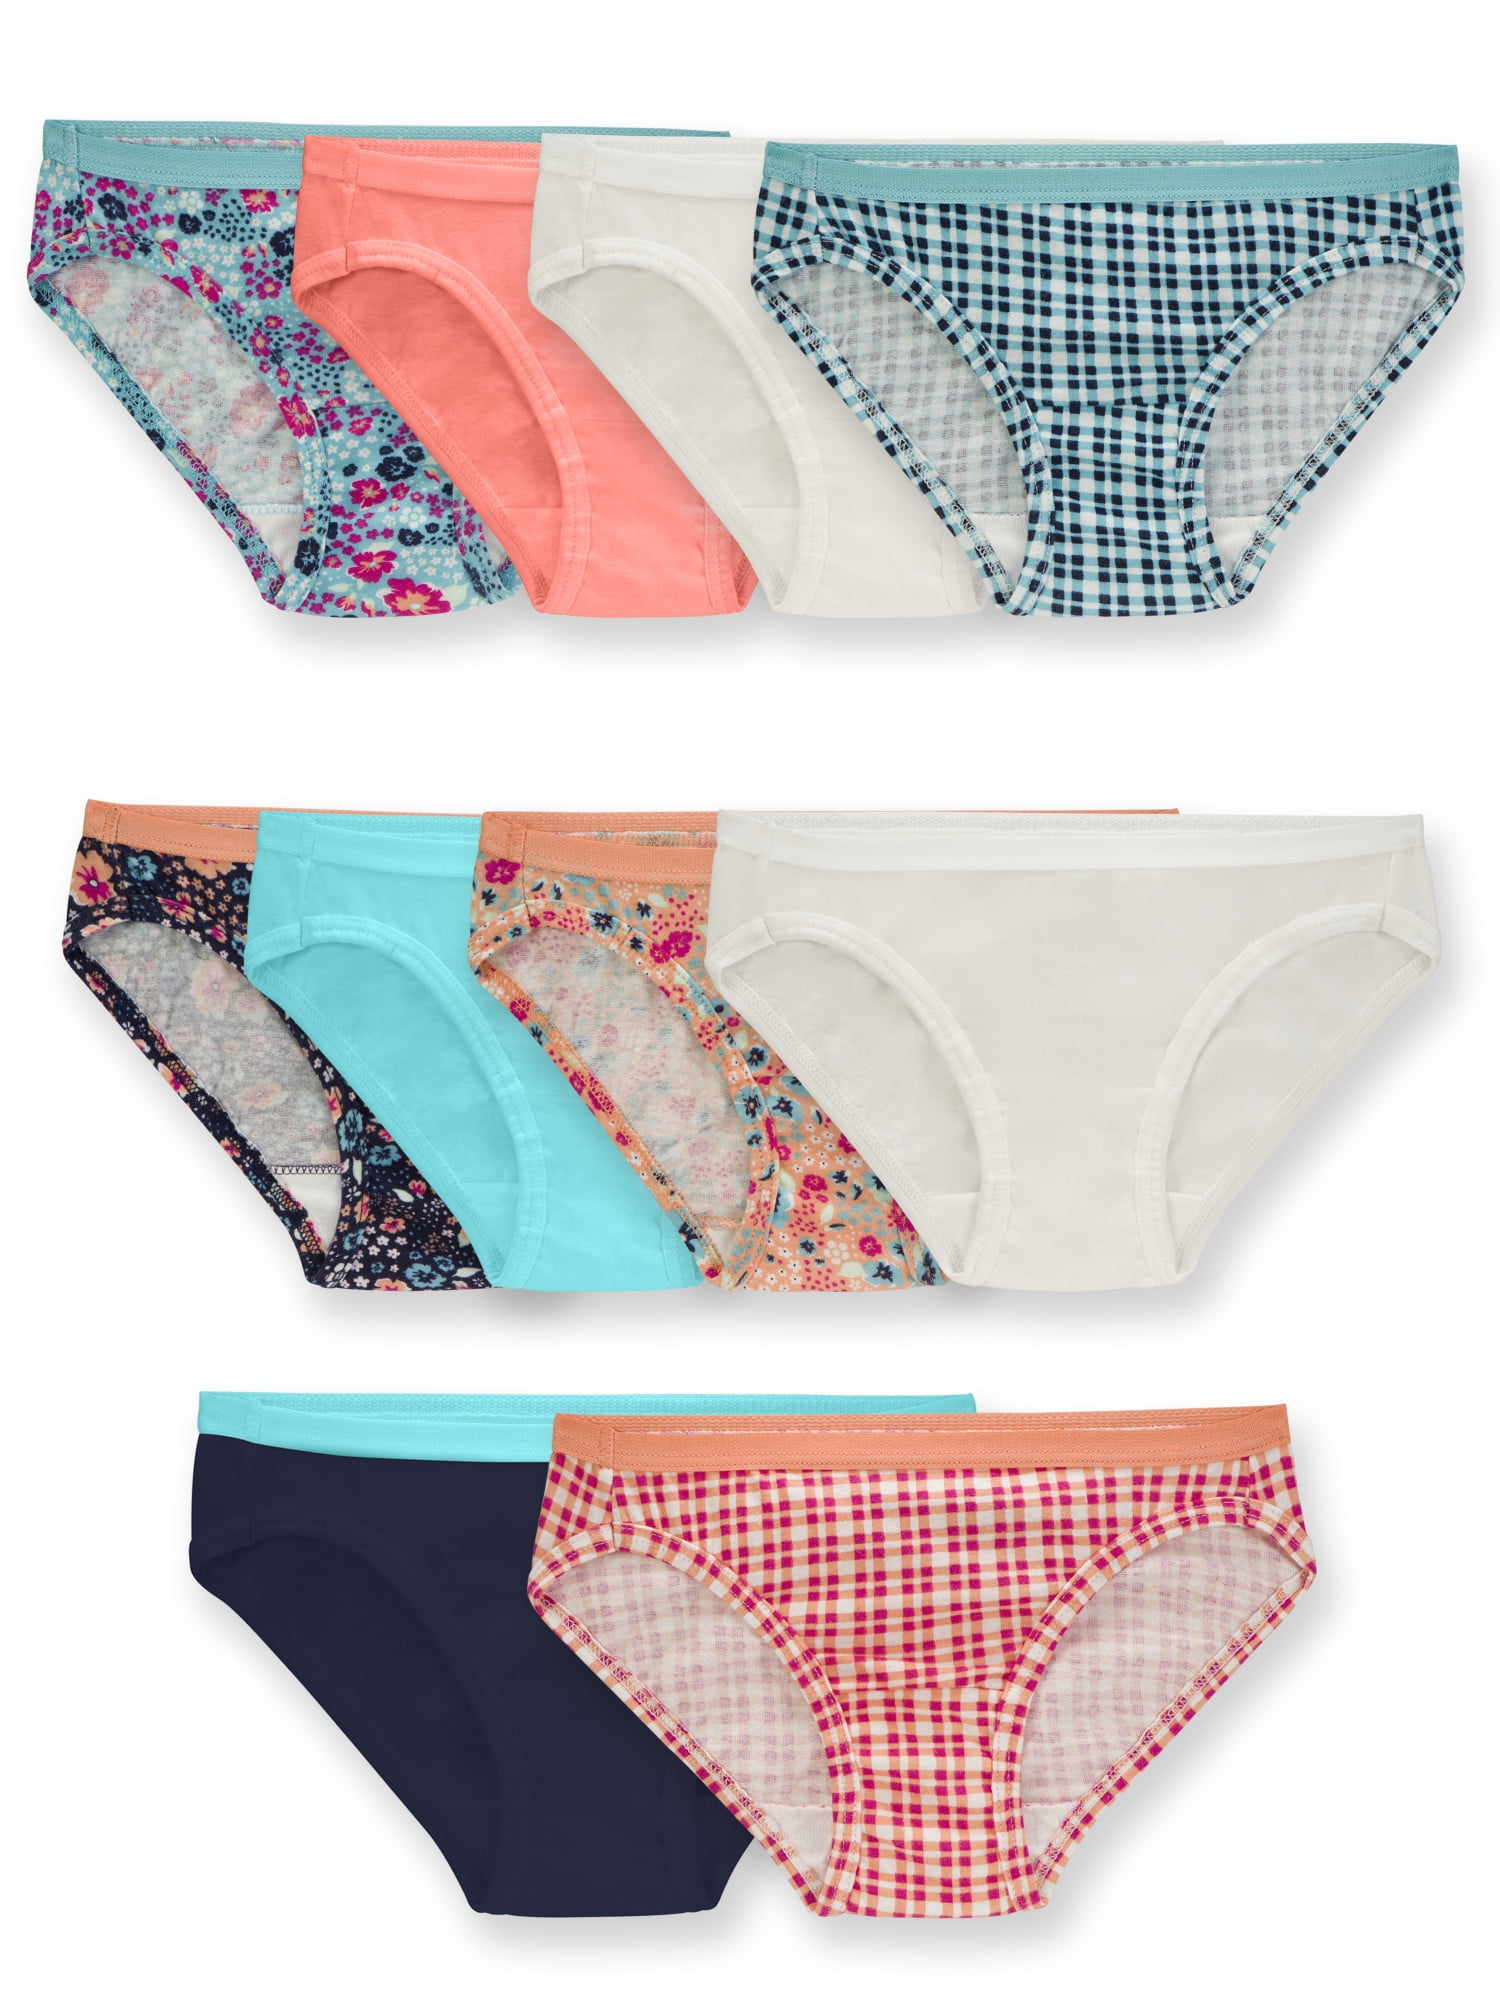 Fruit of the Loom Girls' Assorted Cotton Bikini Underwear, 10 Pack Panties  Sizes 4 - 14 